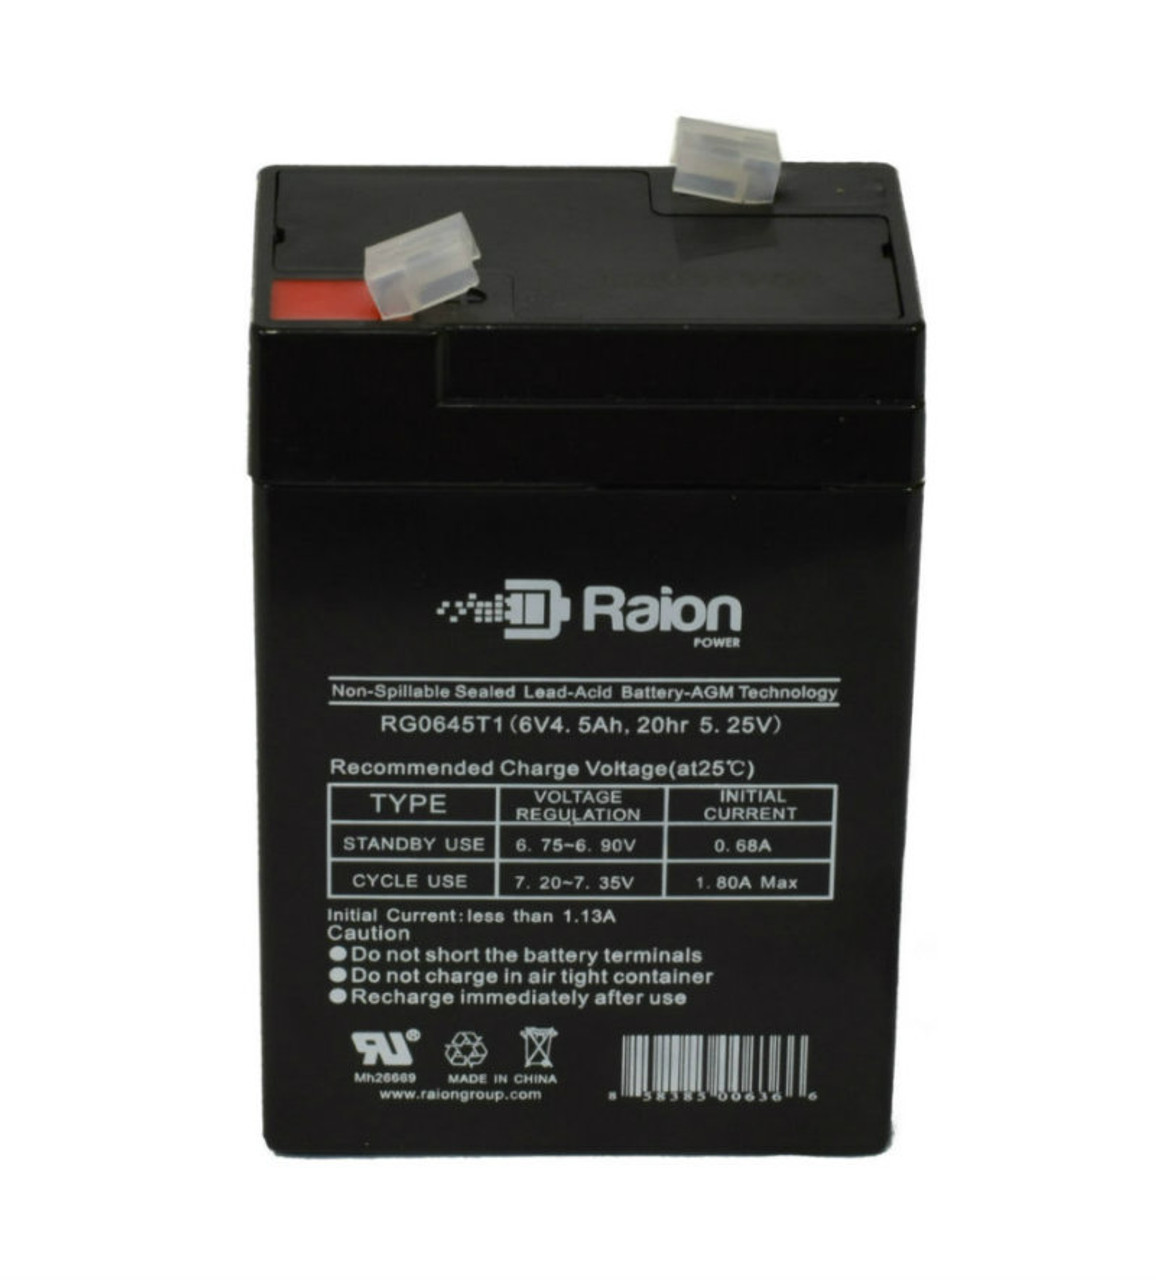 Raion Power RG0645T1 Replacement Battery Cartridge for Sonnenschein A50642S